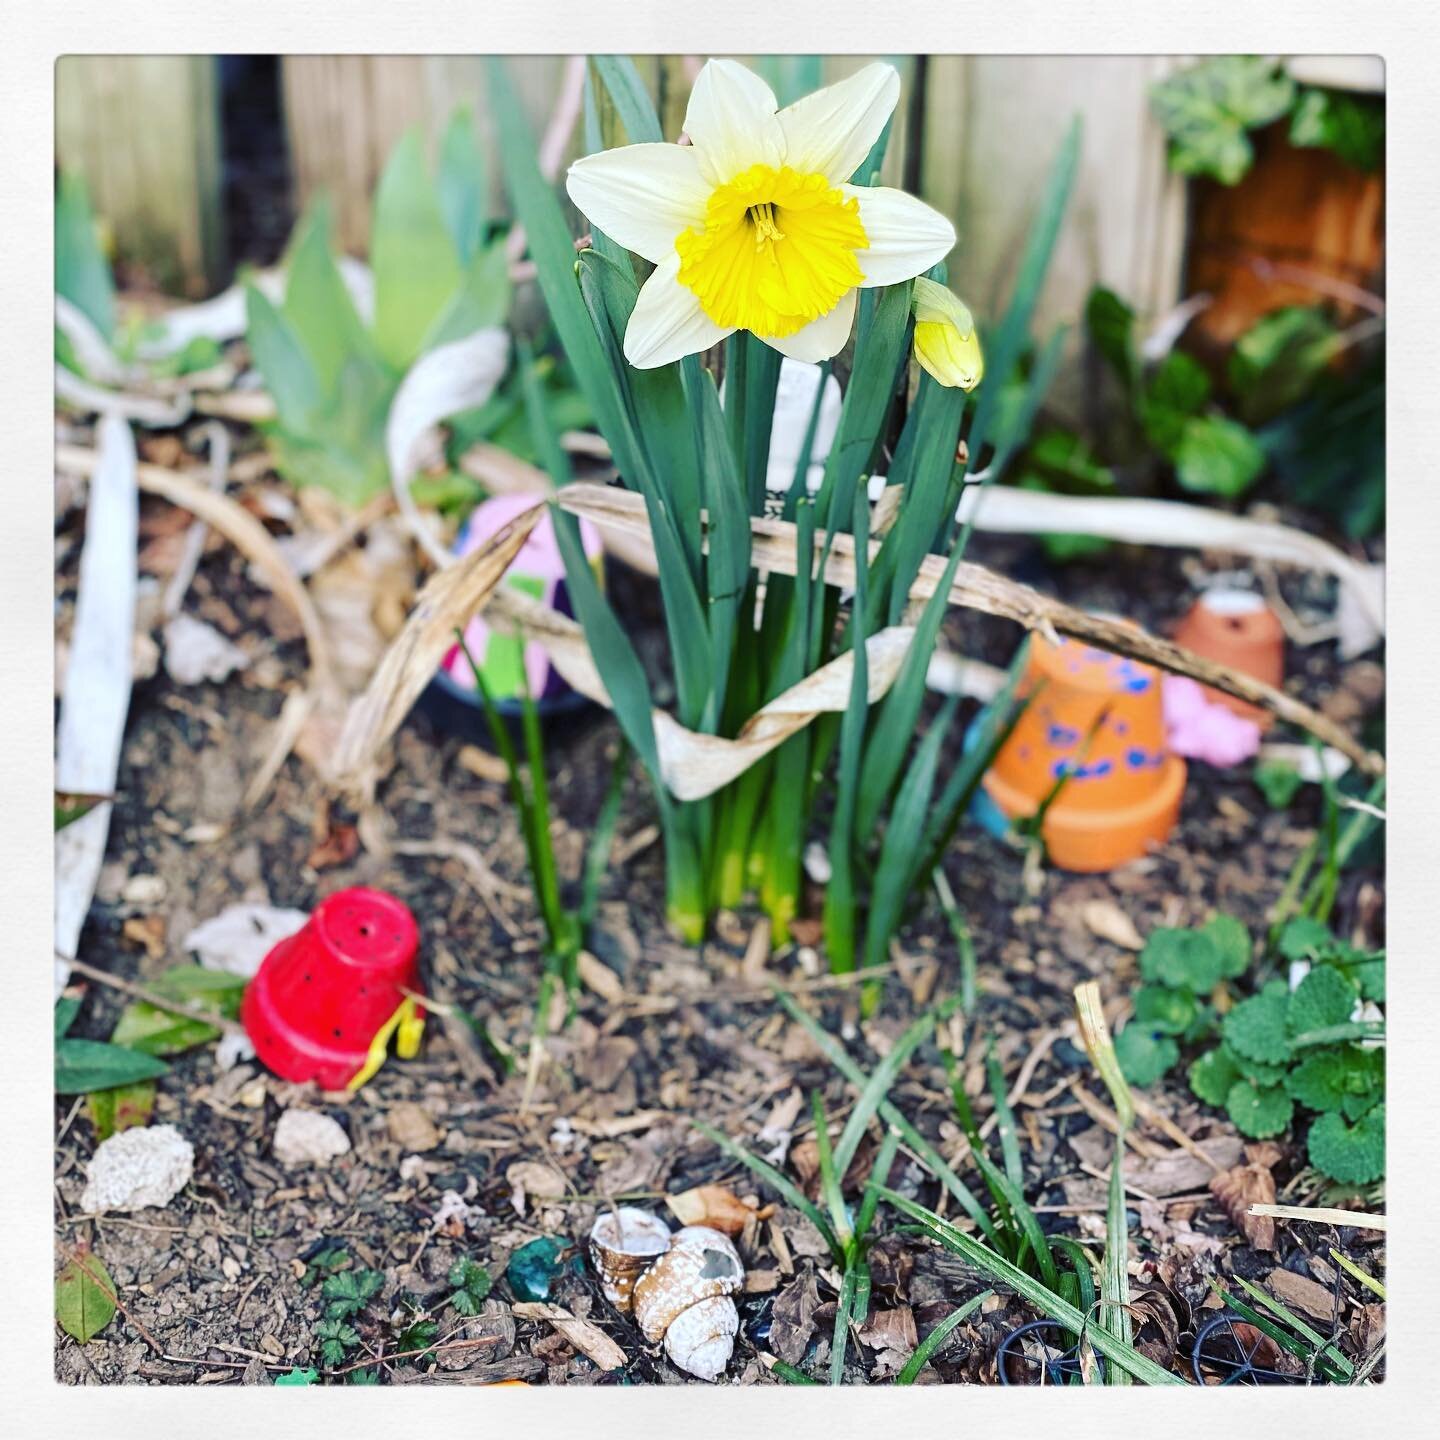 Sweet boy had me document the &ldquo;first spring bloom&rdquo; ❤️

#naturelovers #getoutside #springiscoming #soareallergies